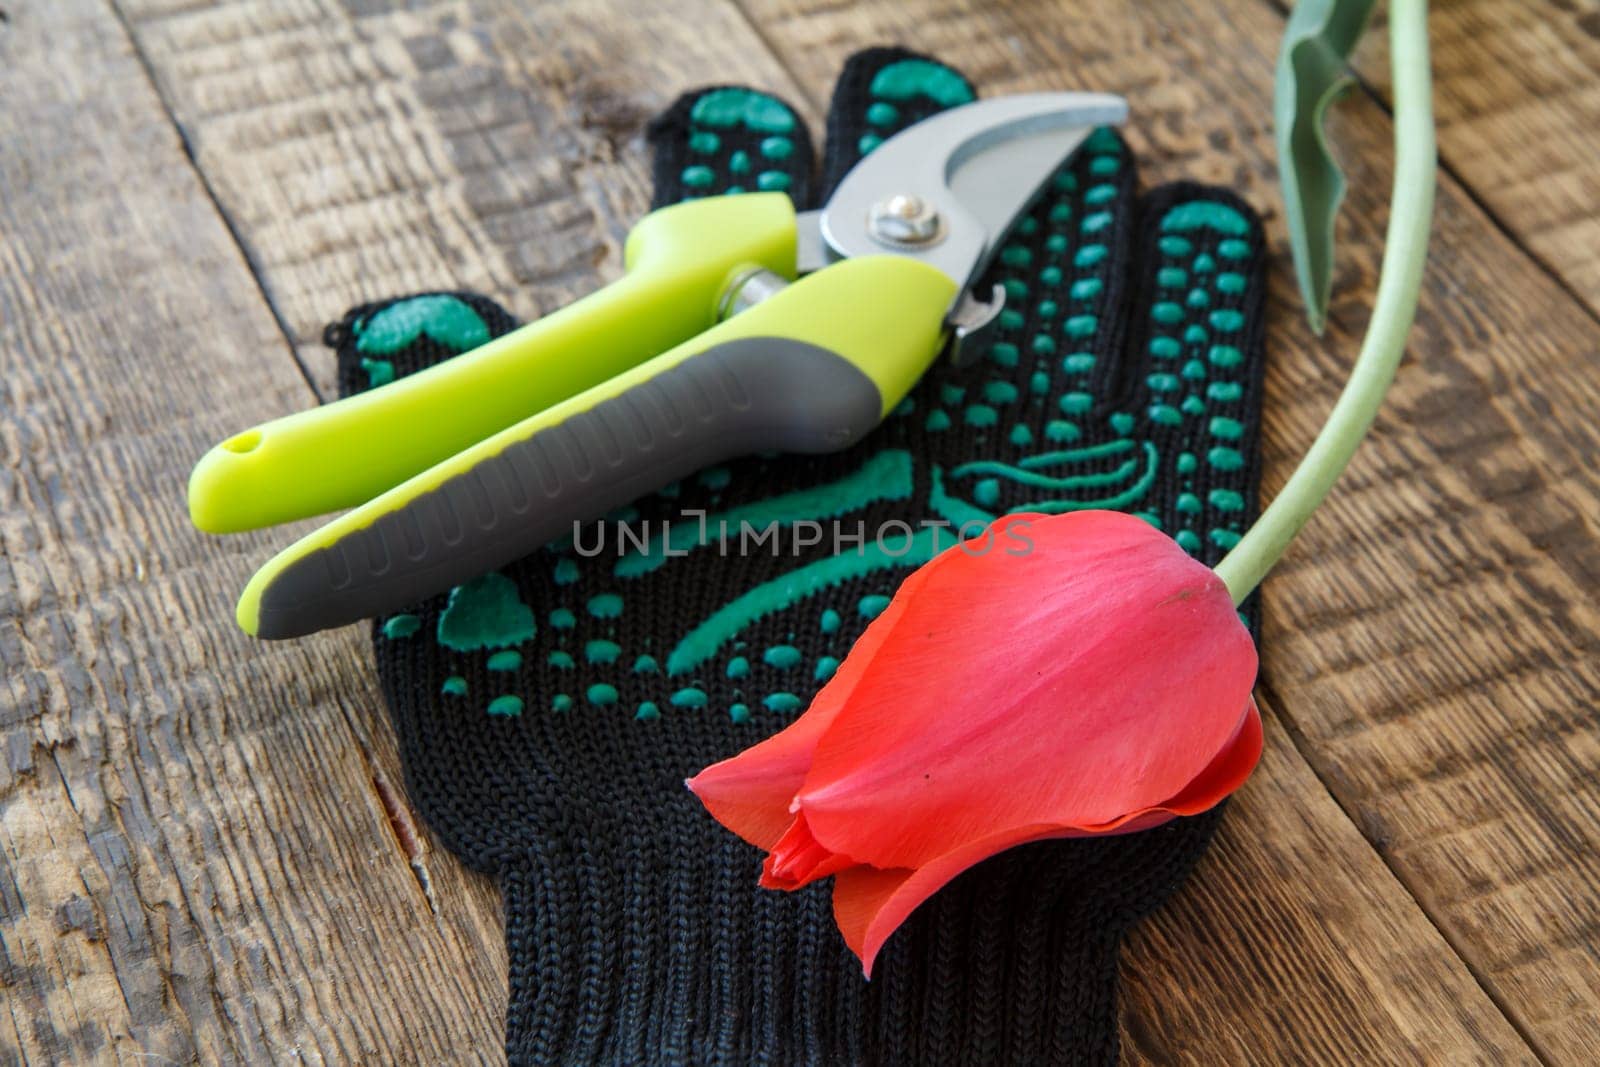 Garden glove, pruner and cut tulip on wooden boards. by mvg6894